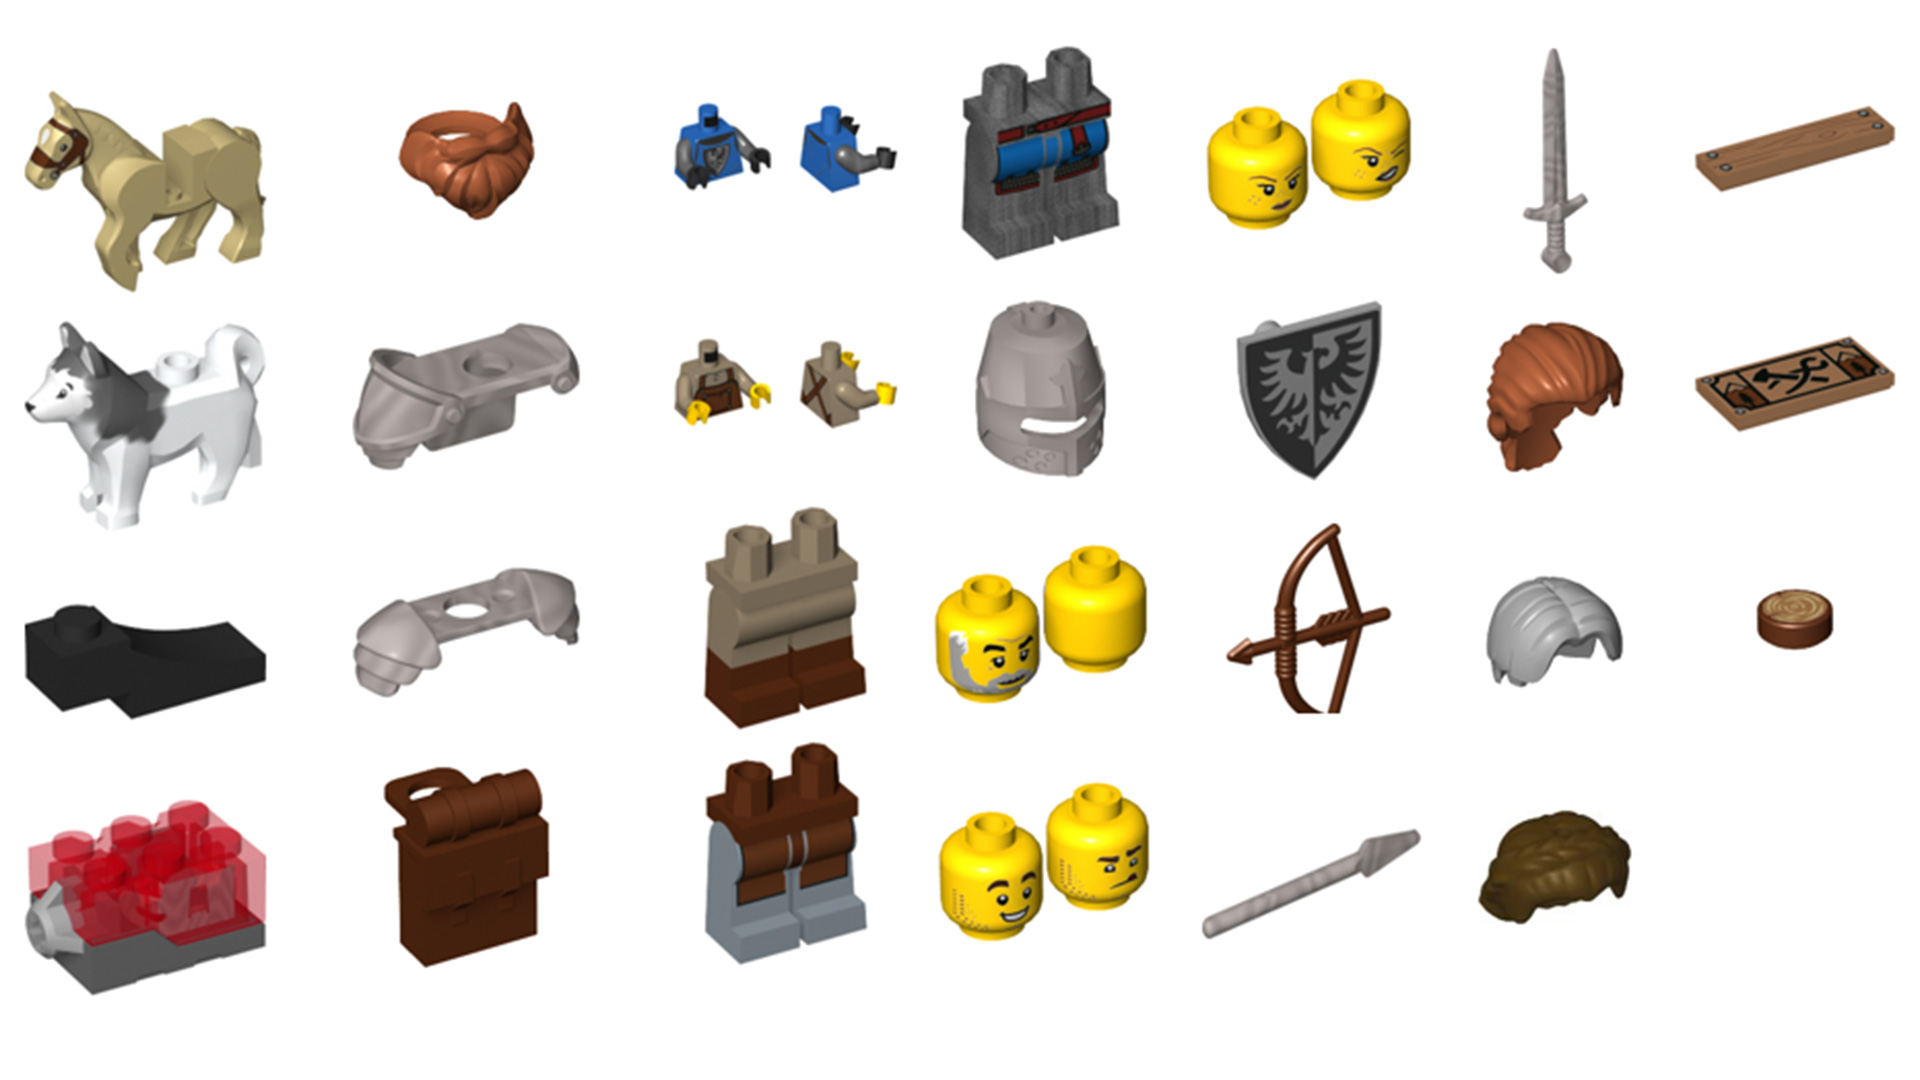 LEGO Bricks and Pieces Part List – February 2021